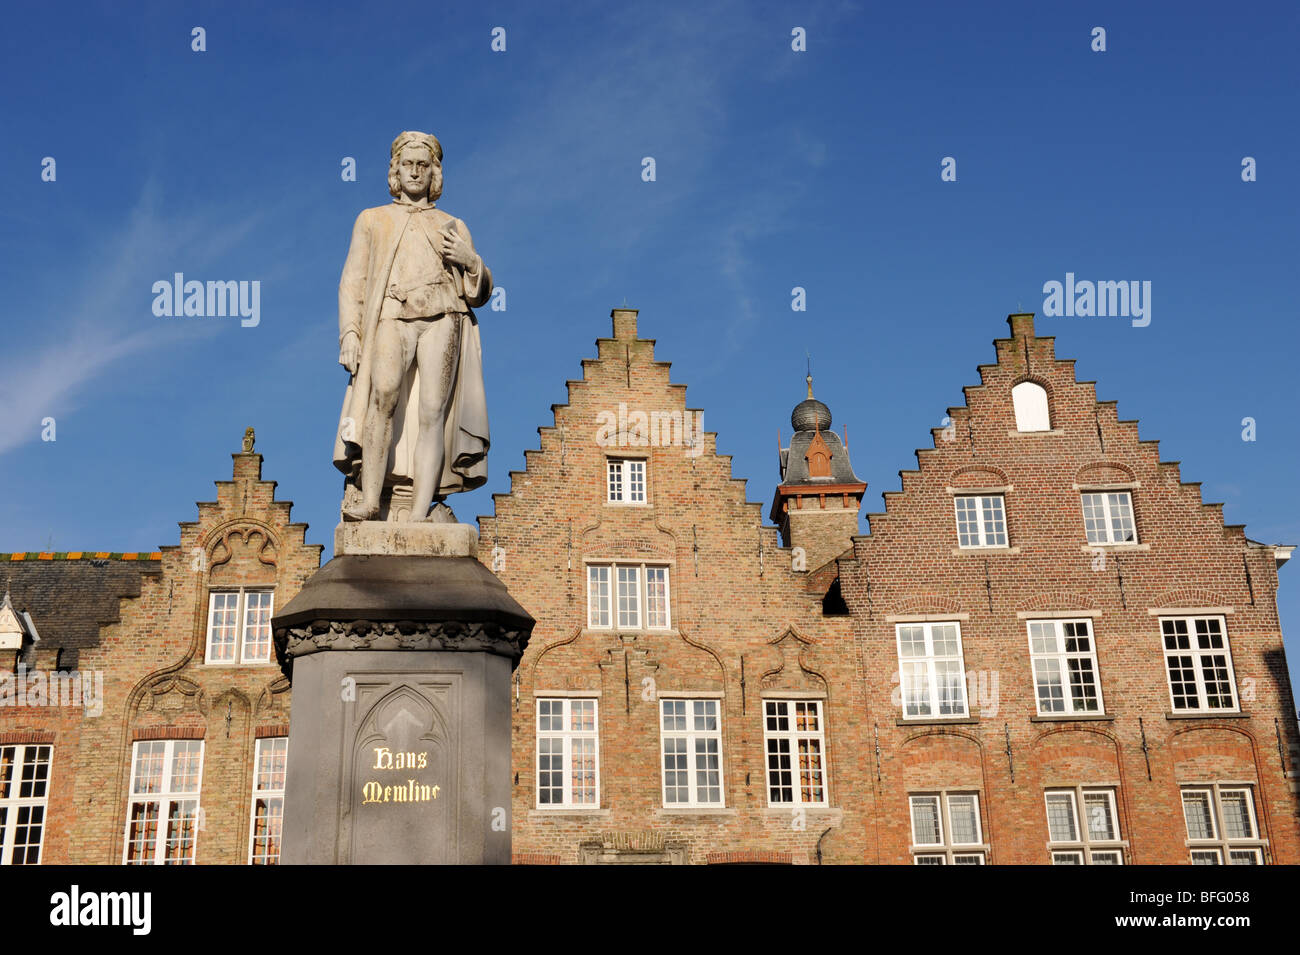 Statue of Artist Hans Memling at Bruges in Belgium Europe Stock Photo